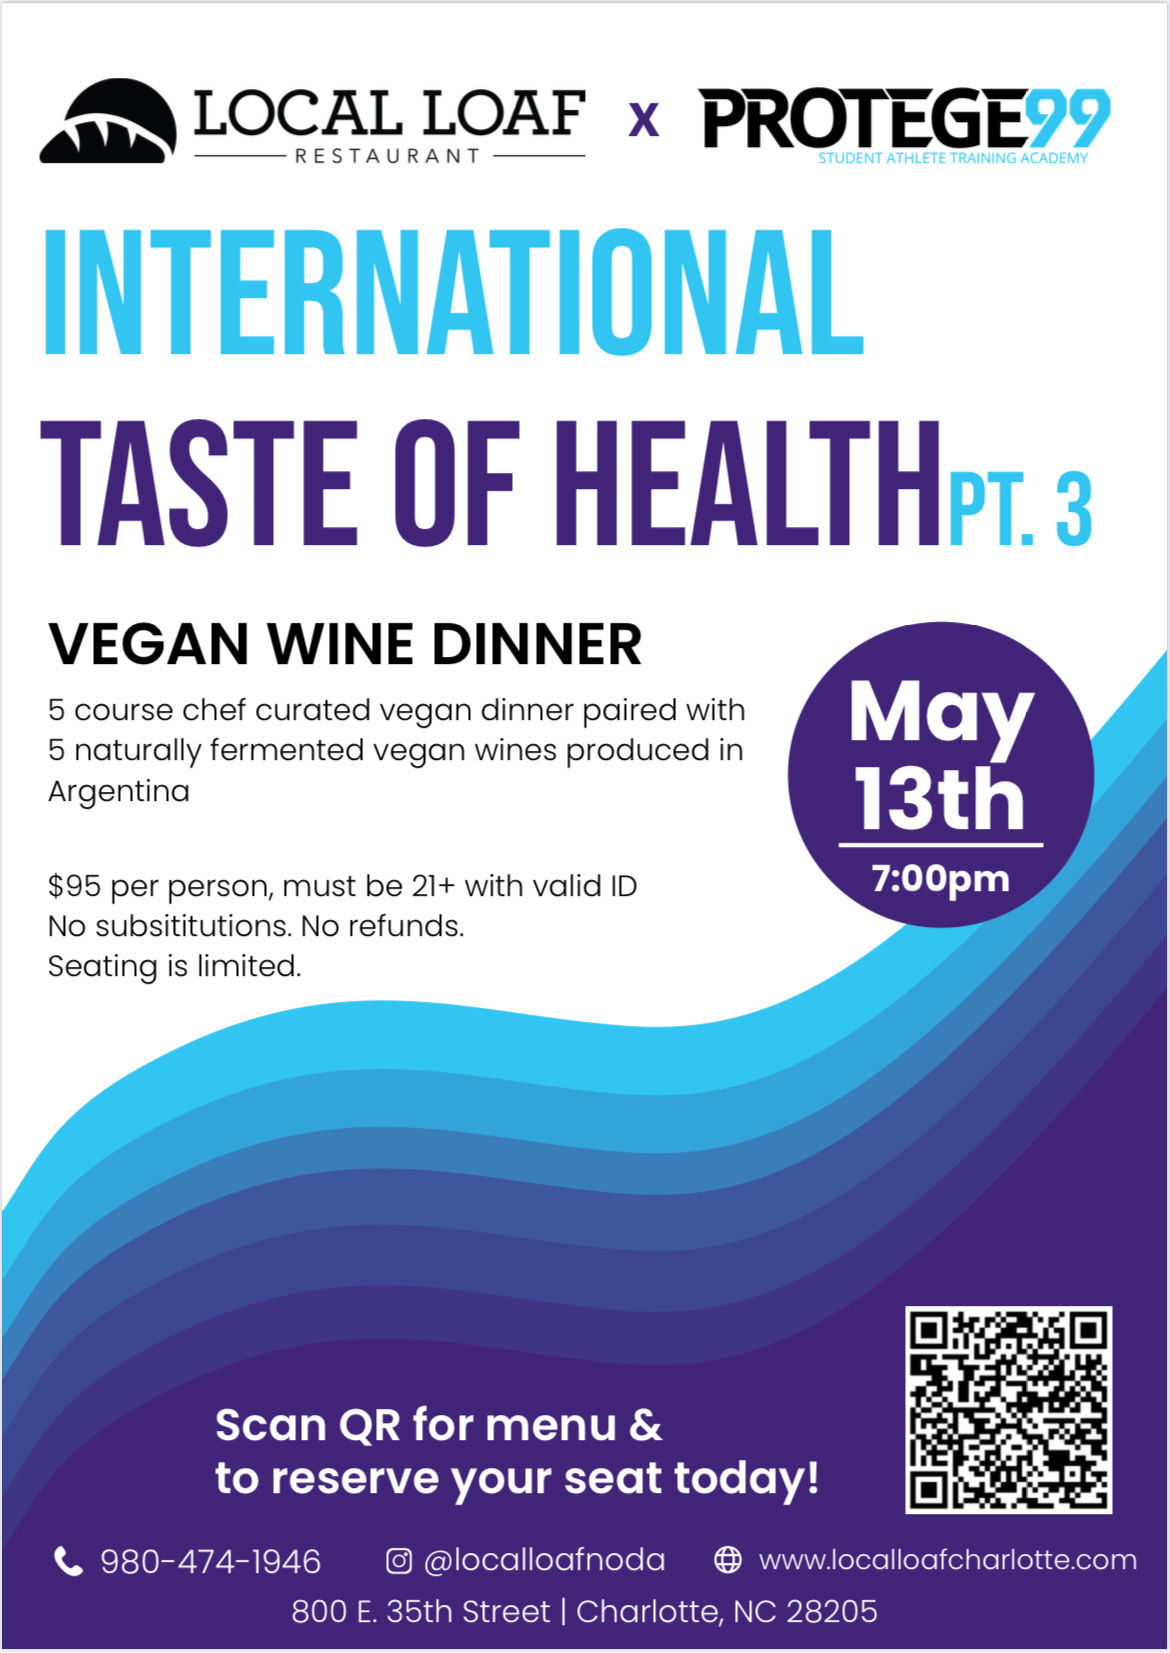 Protege99 International Taste Of Health Flyer